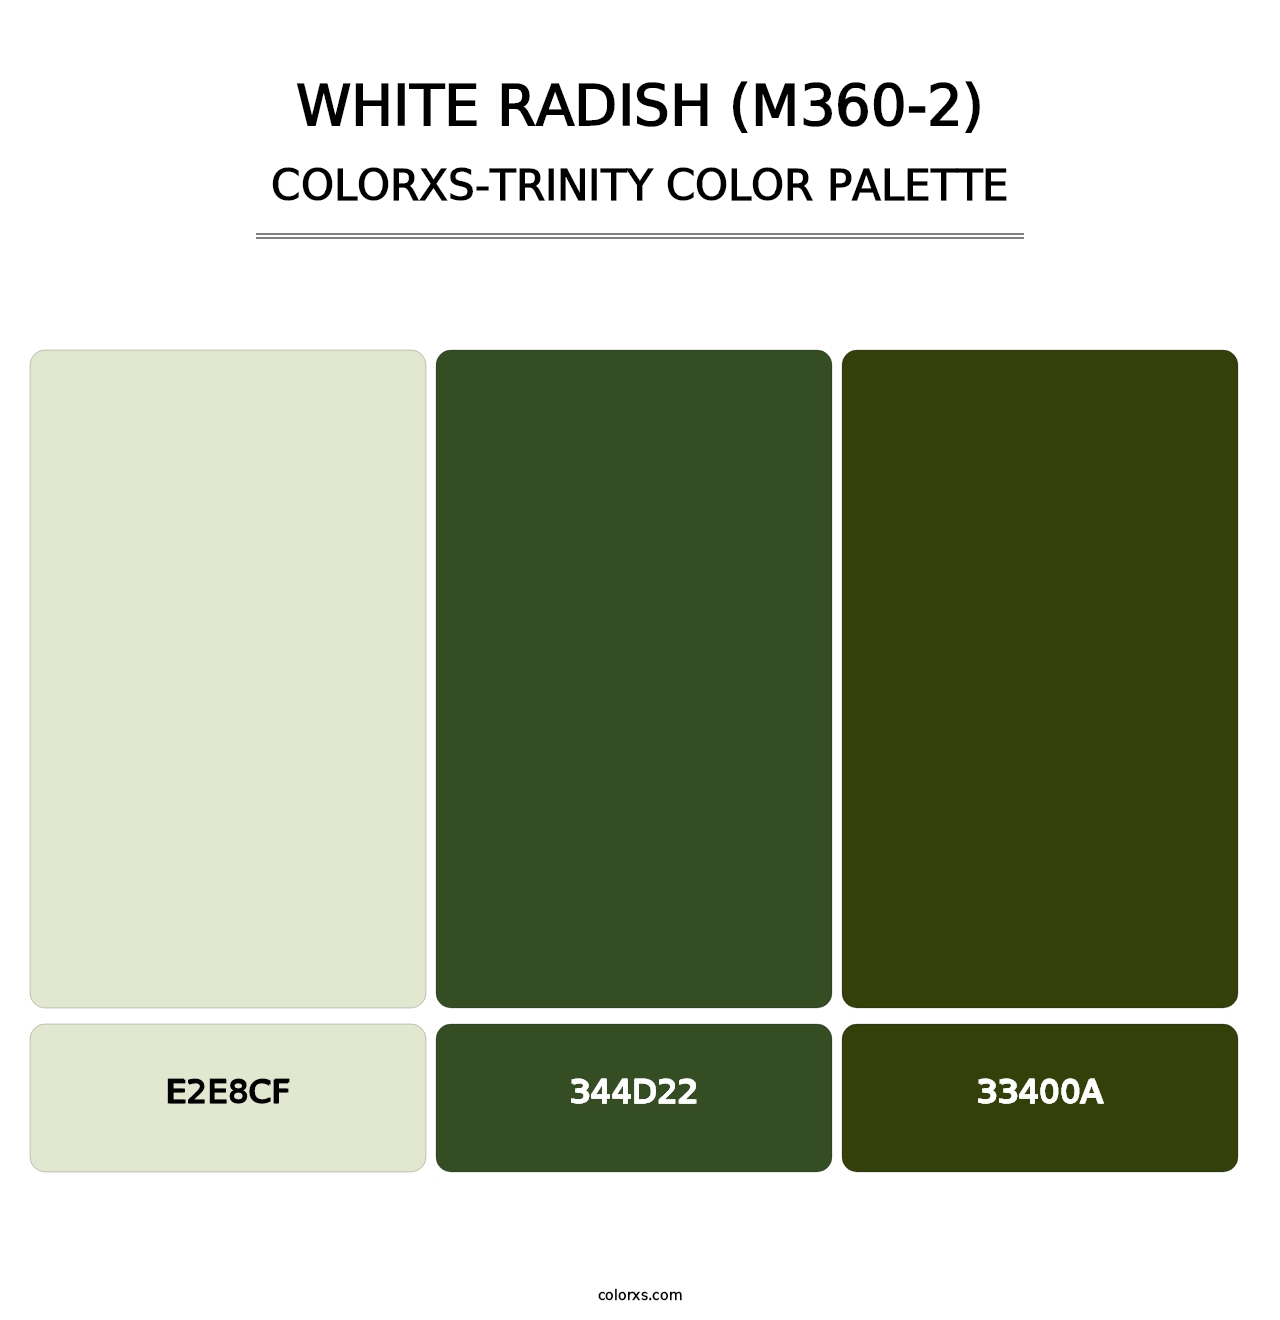 White Radish (M360-2) - Colorxs Trinity Palette